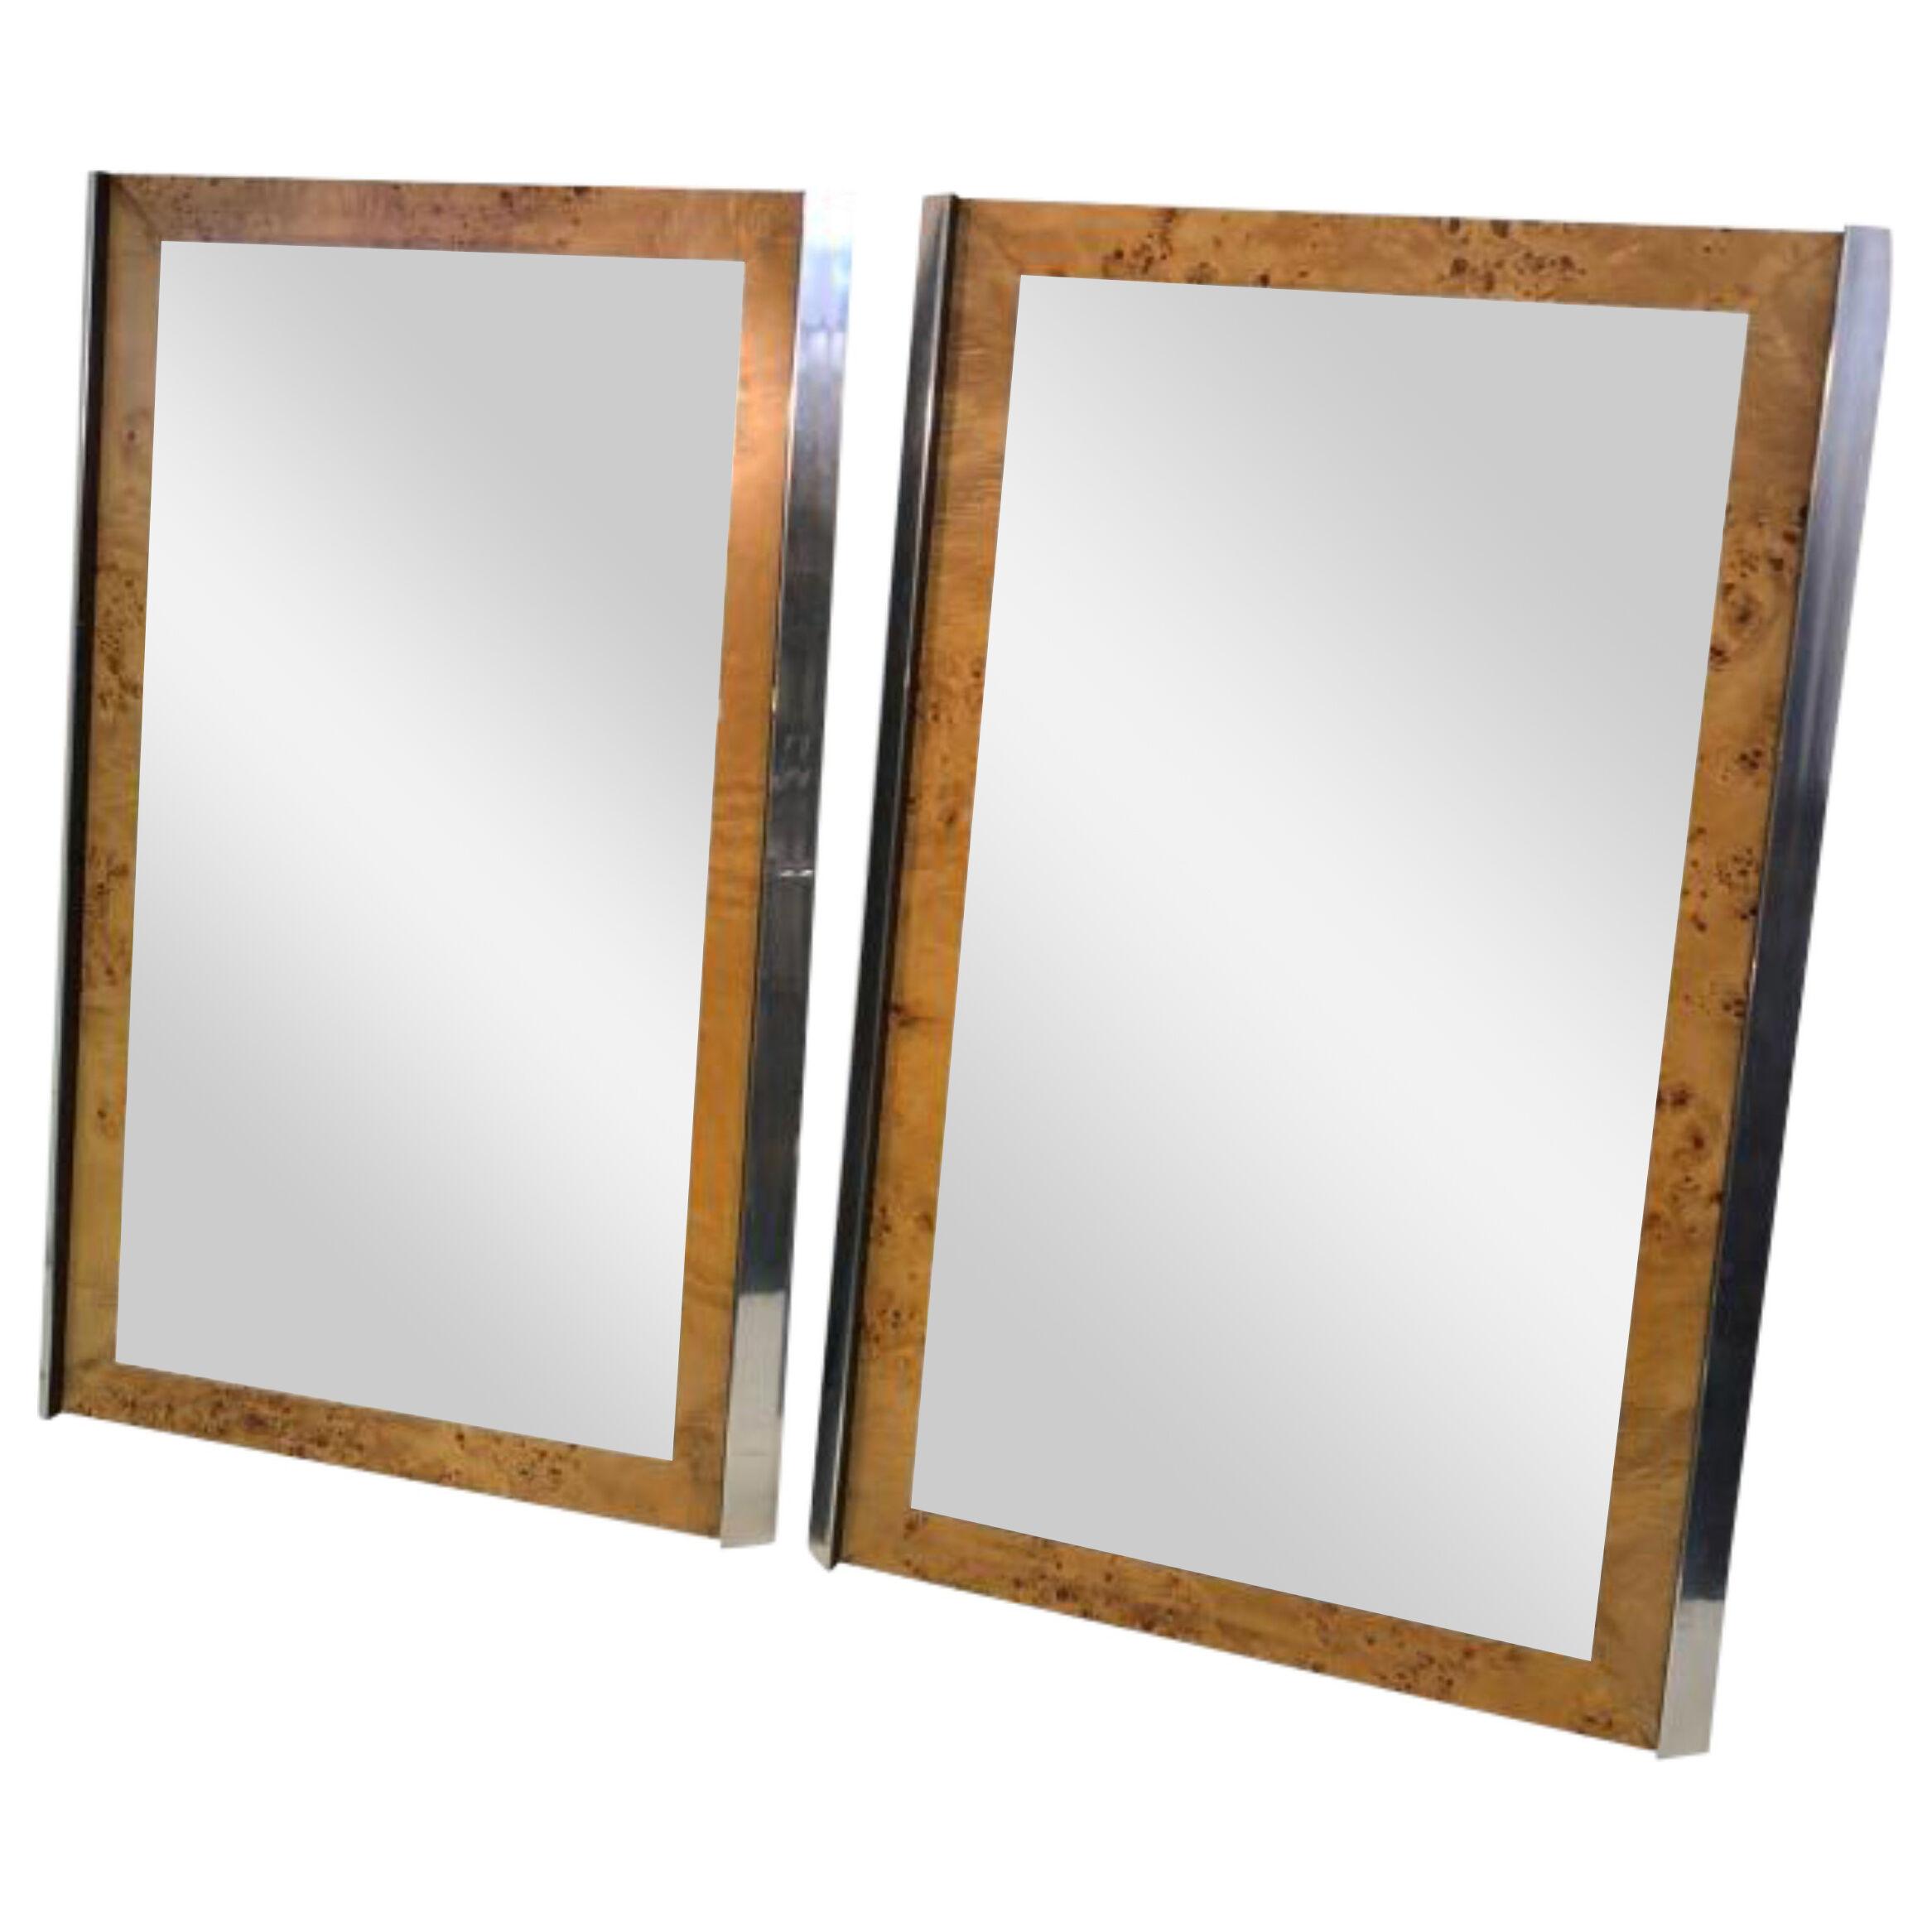 Burlwood and Chrome Modern Mirrors - a Pair	